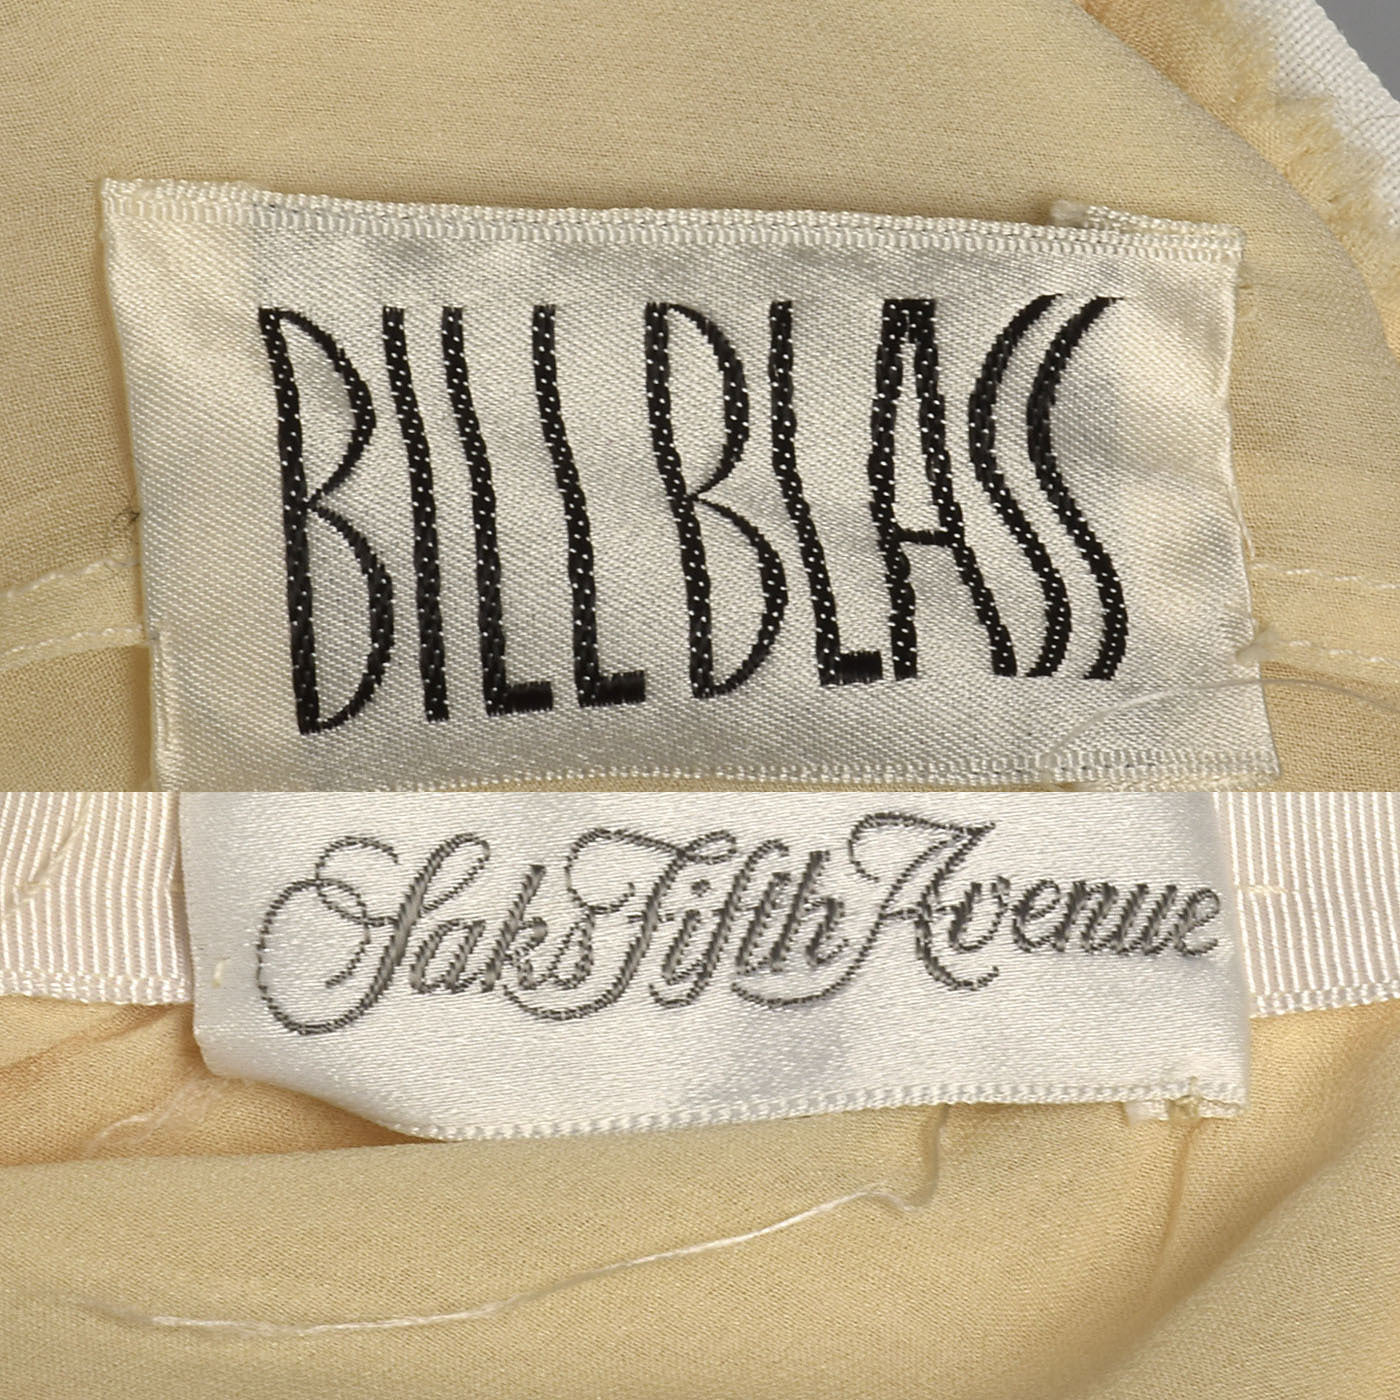 1970s Bill Blass Cream Silk Secretary Dress